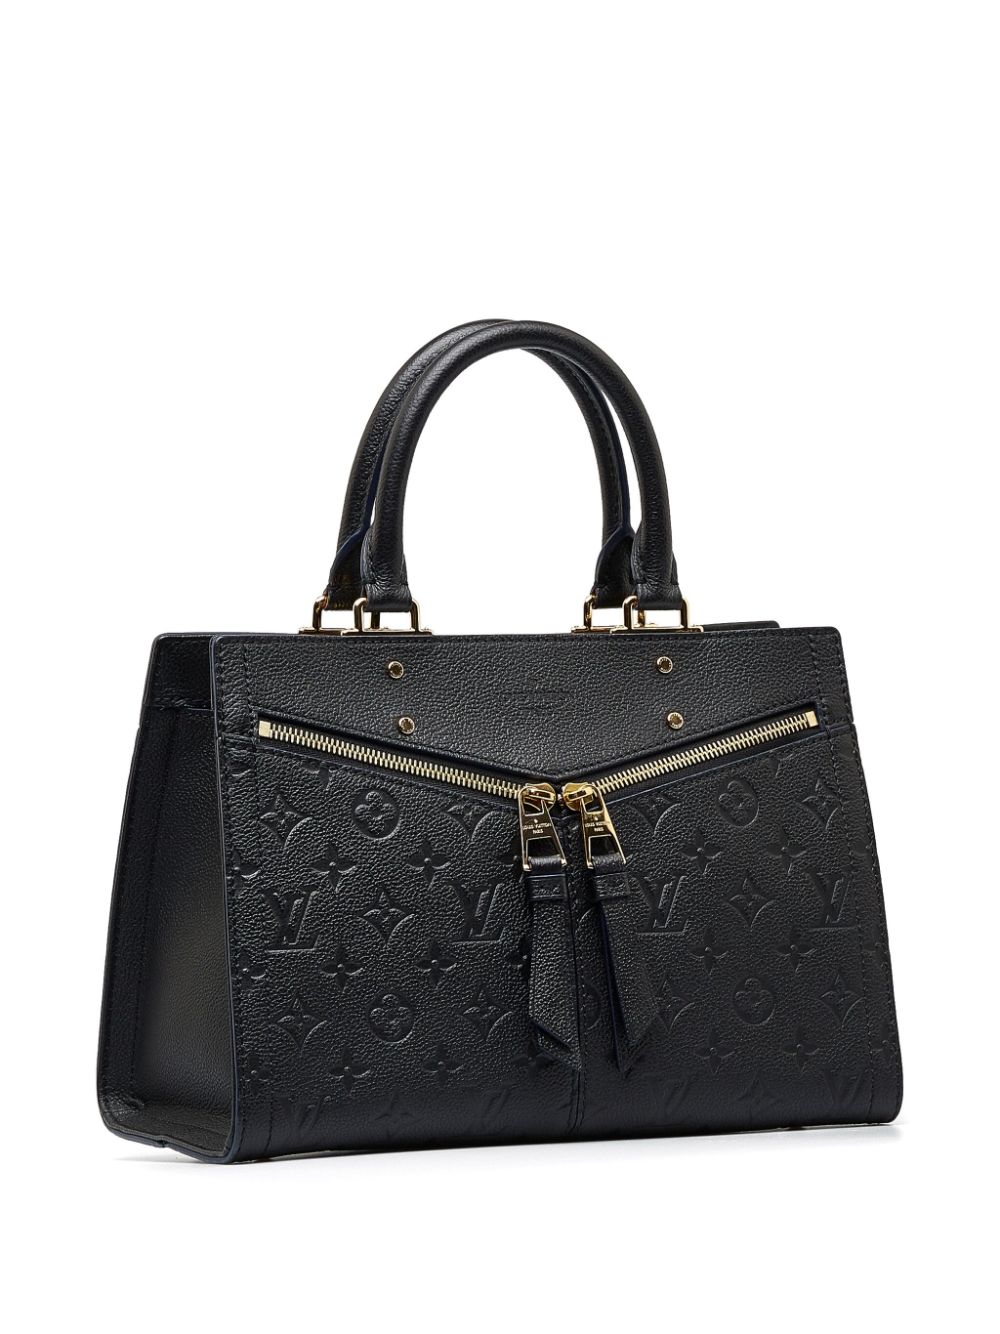 Louis Vuitton Sully PM Monogram Shoulder Bag - Farfetch